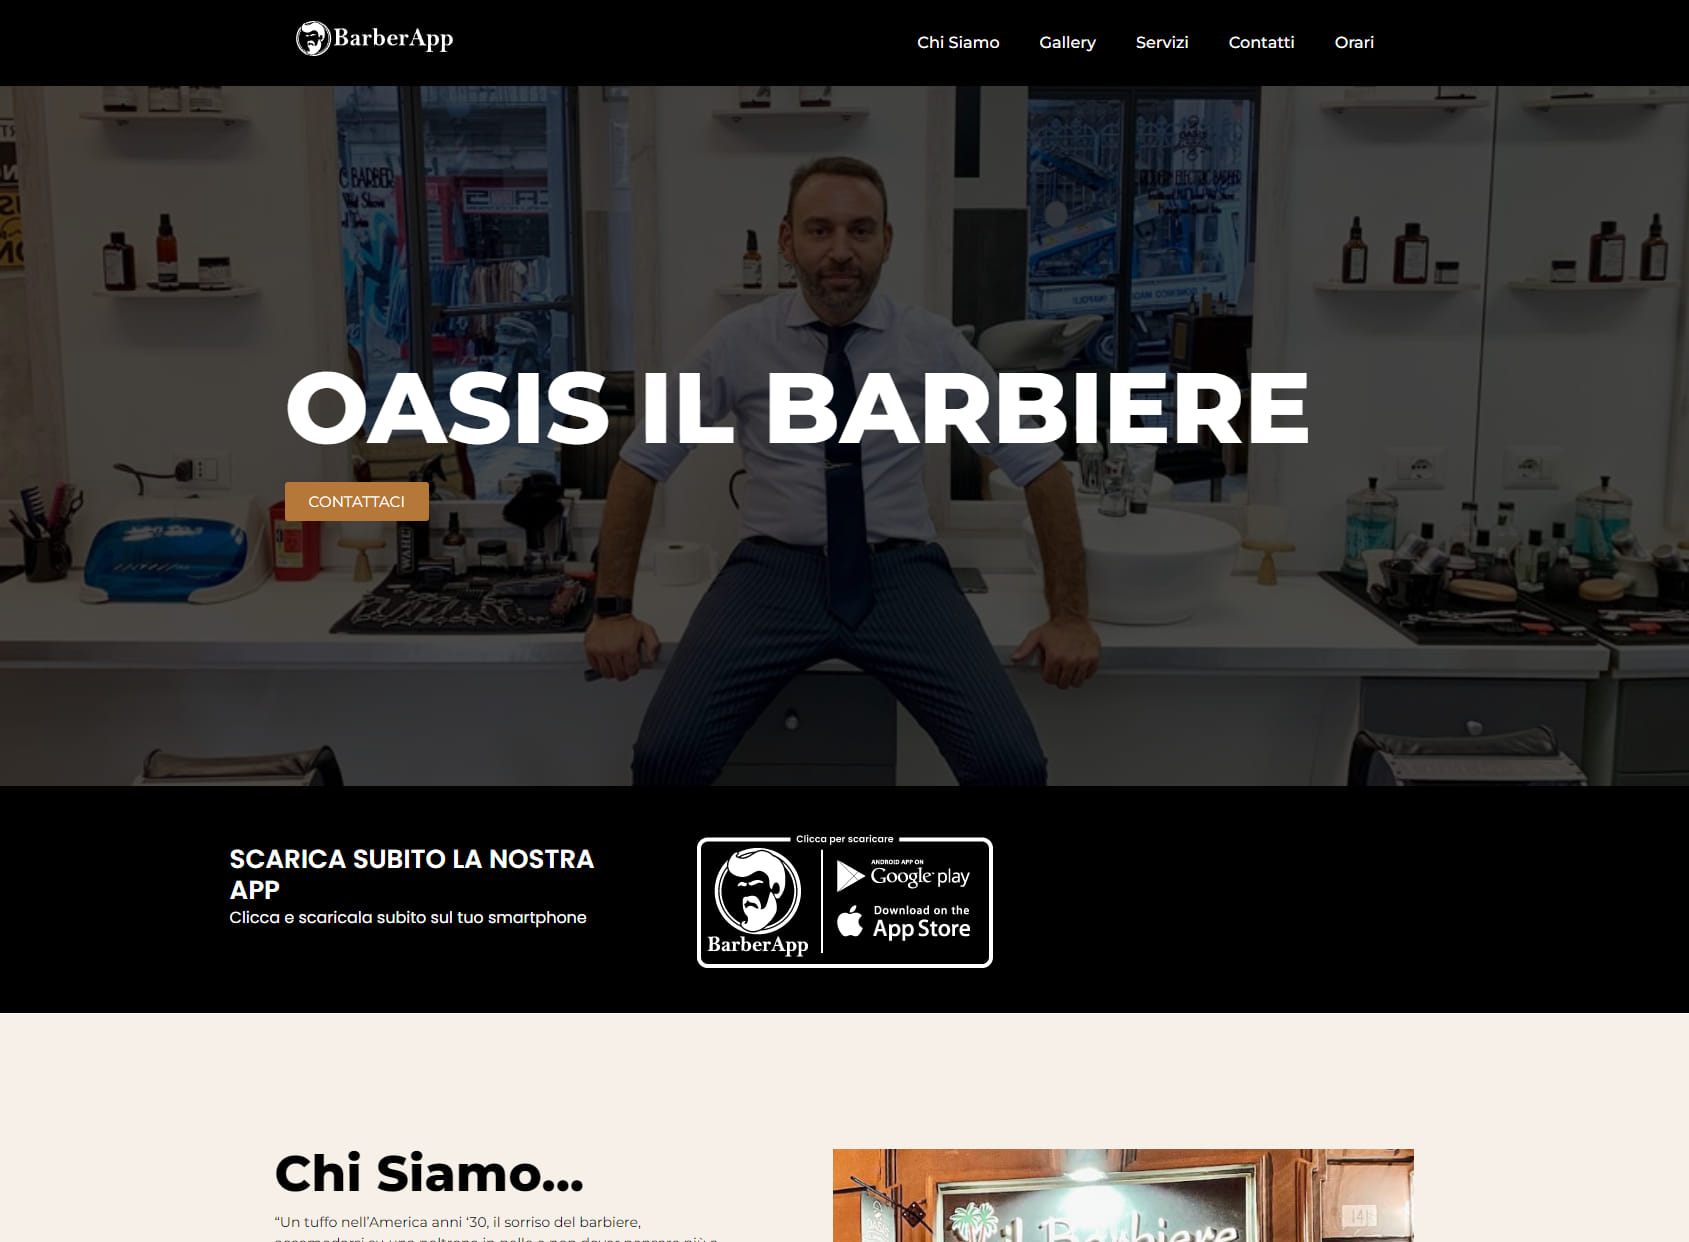 Oasis il Barbiere (BARBER SHOP)